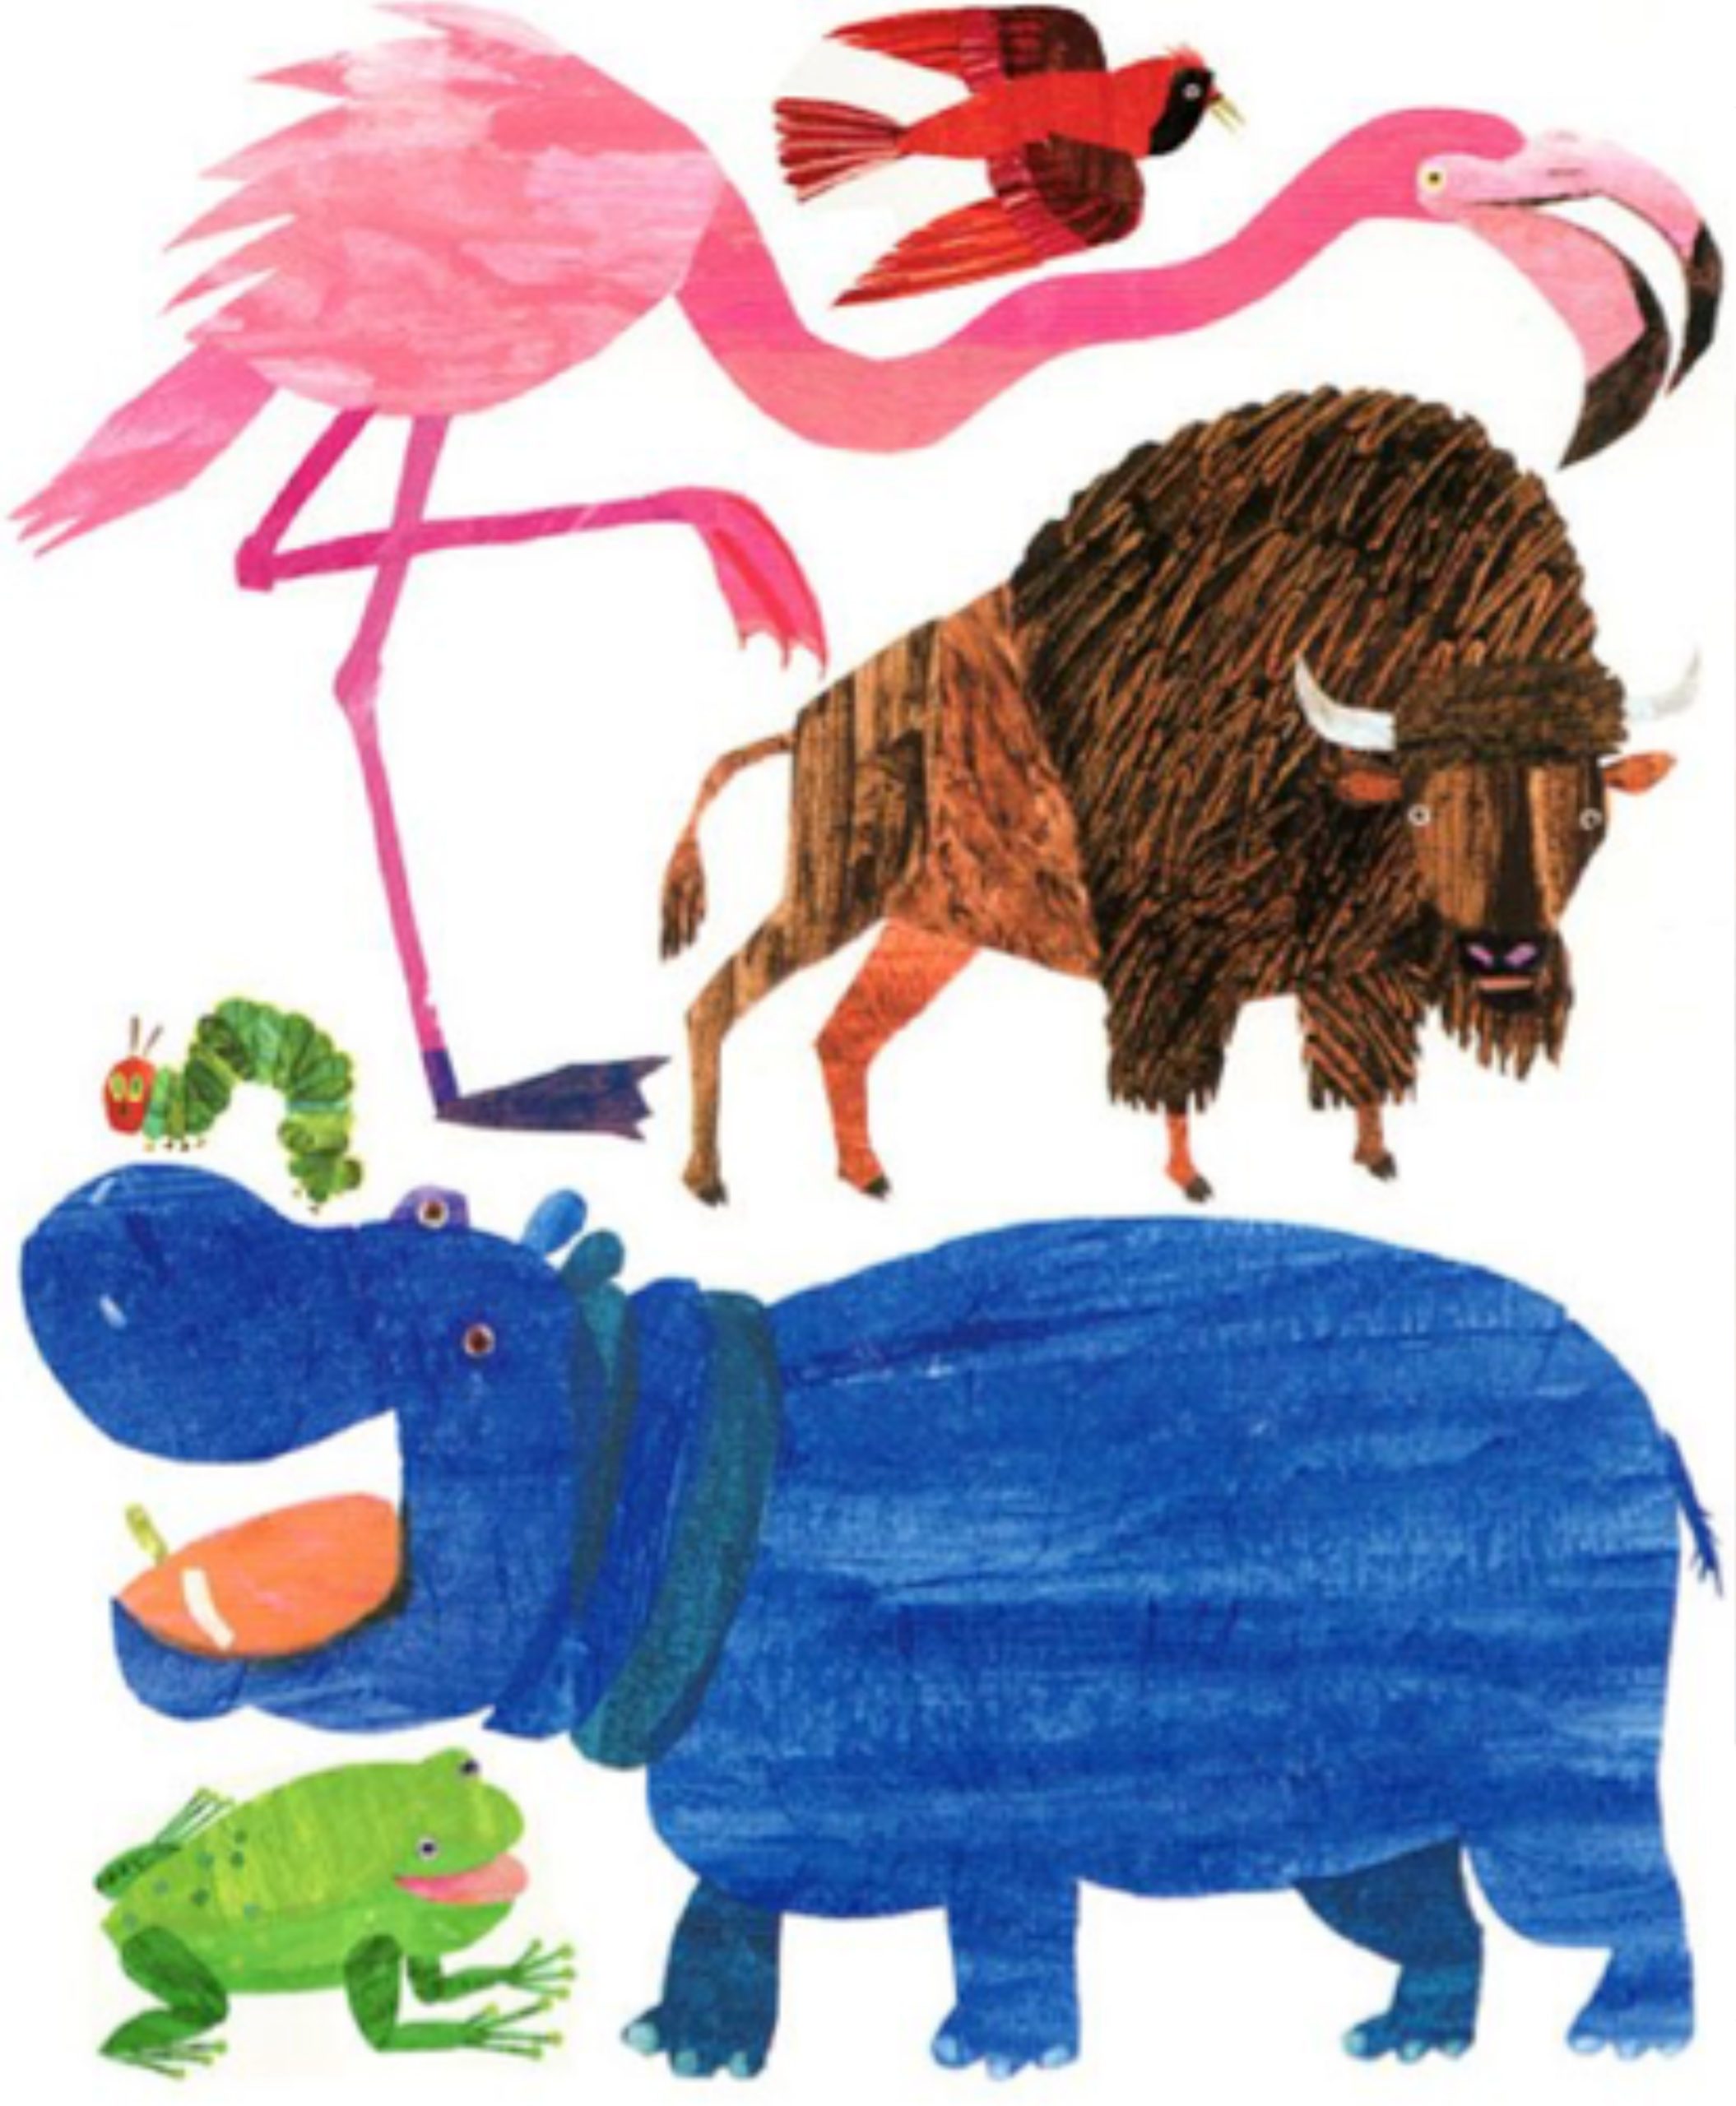 Eric Carle book animal characters - flamingo, frog, caterpillar, hippo, and buffalo